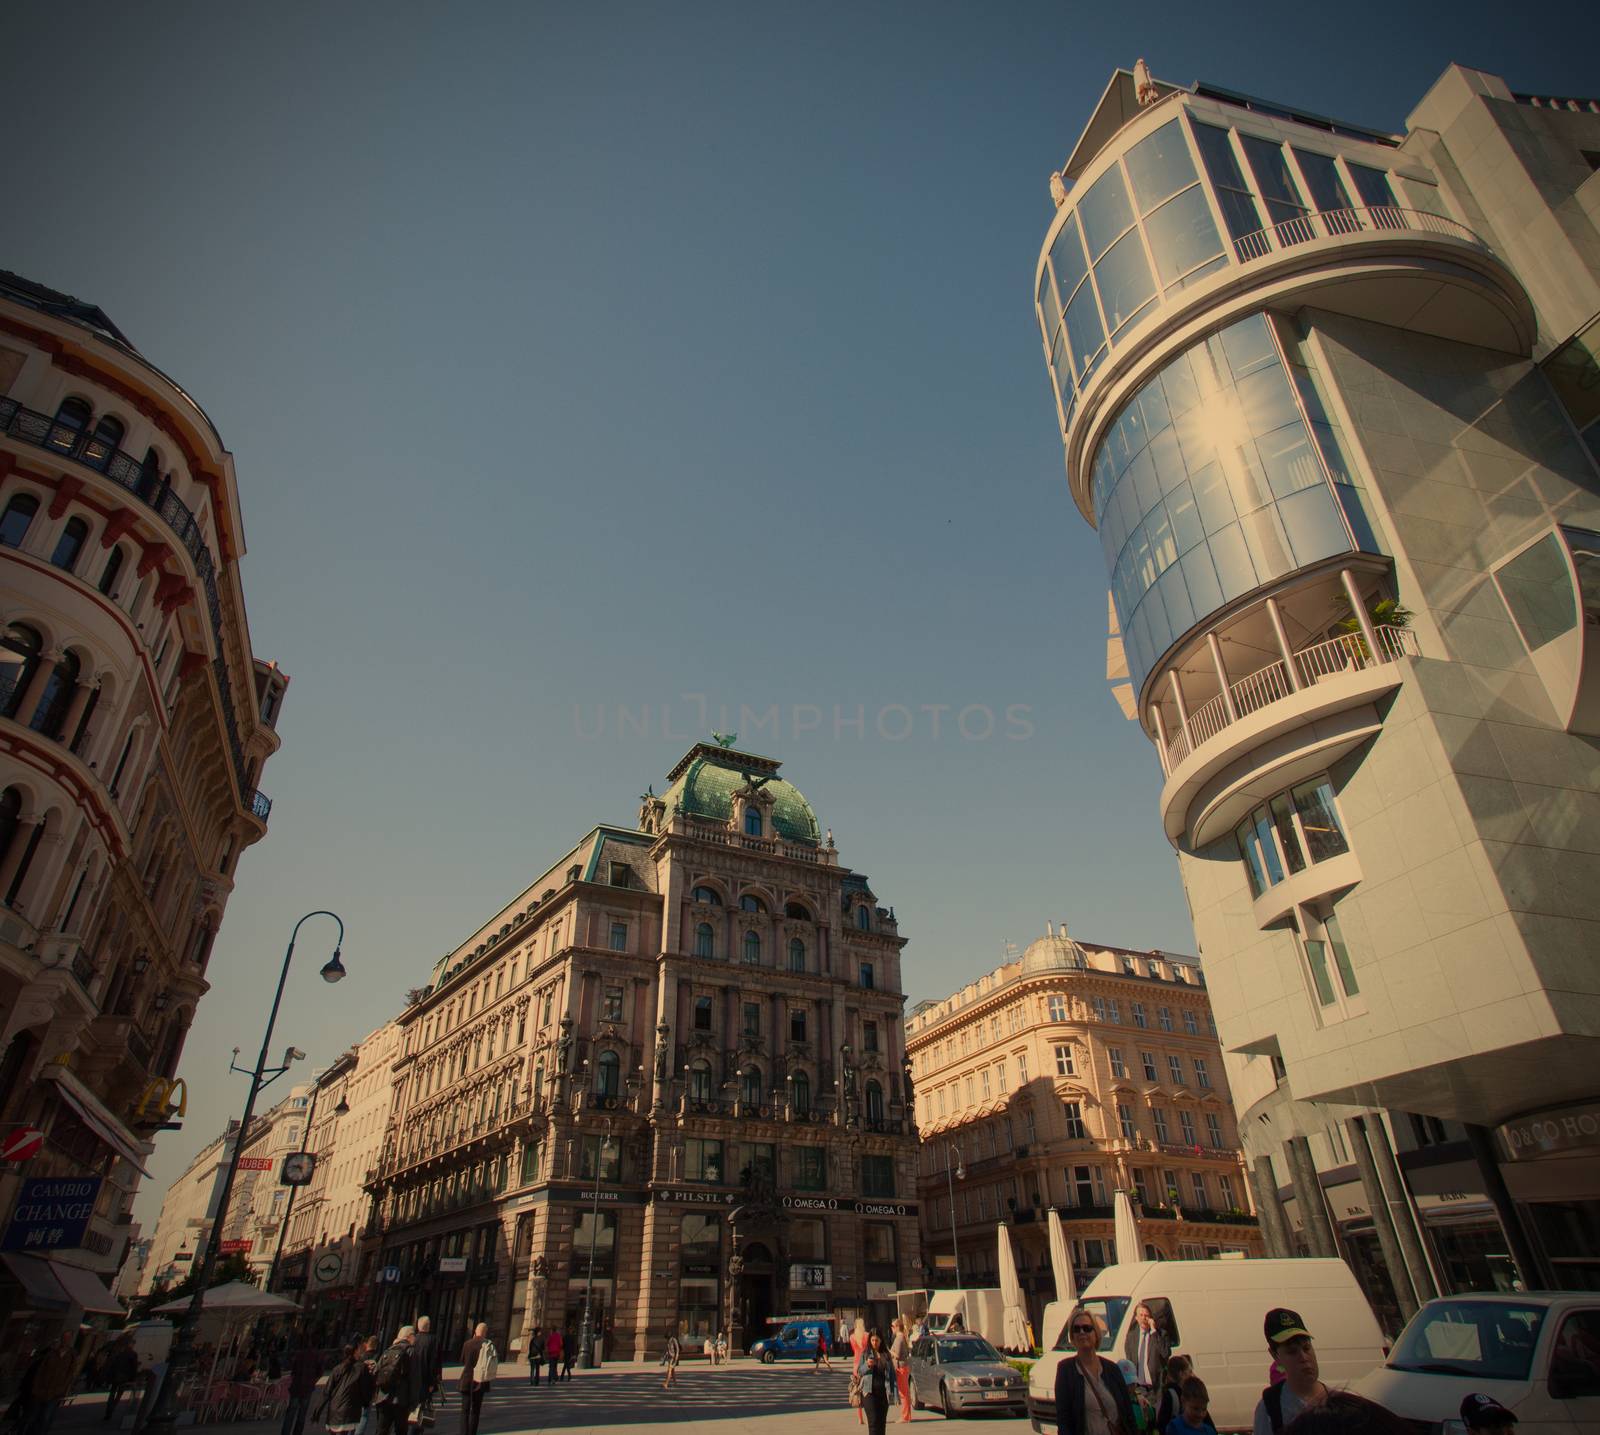 Austria, Vienna 12.06.2013, buildings on Stephansplatz by Astroid